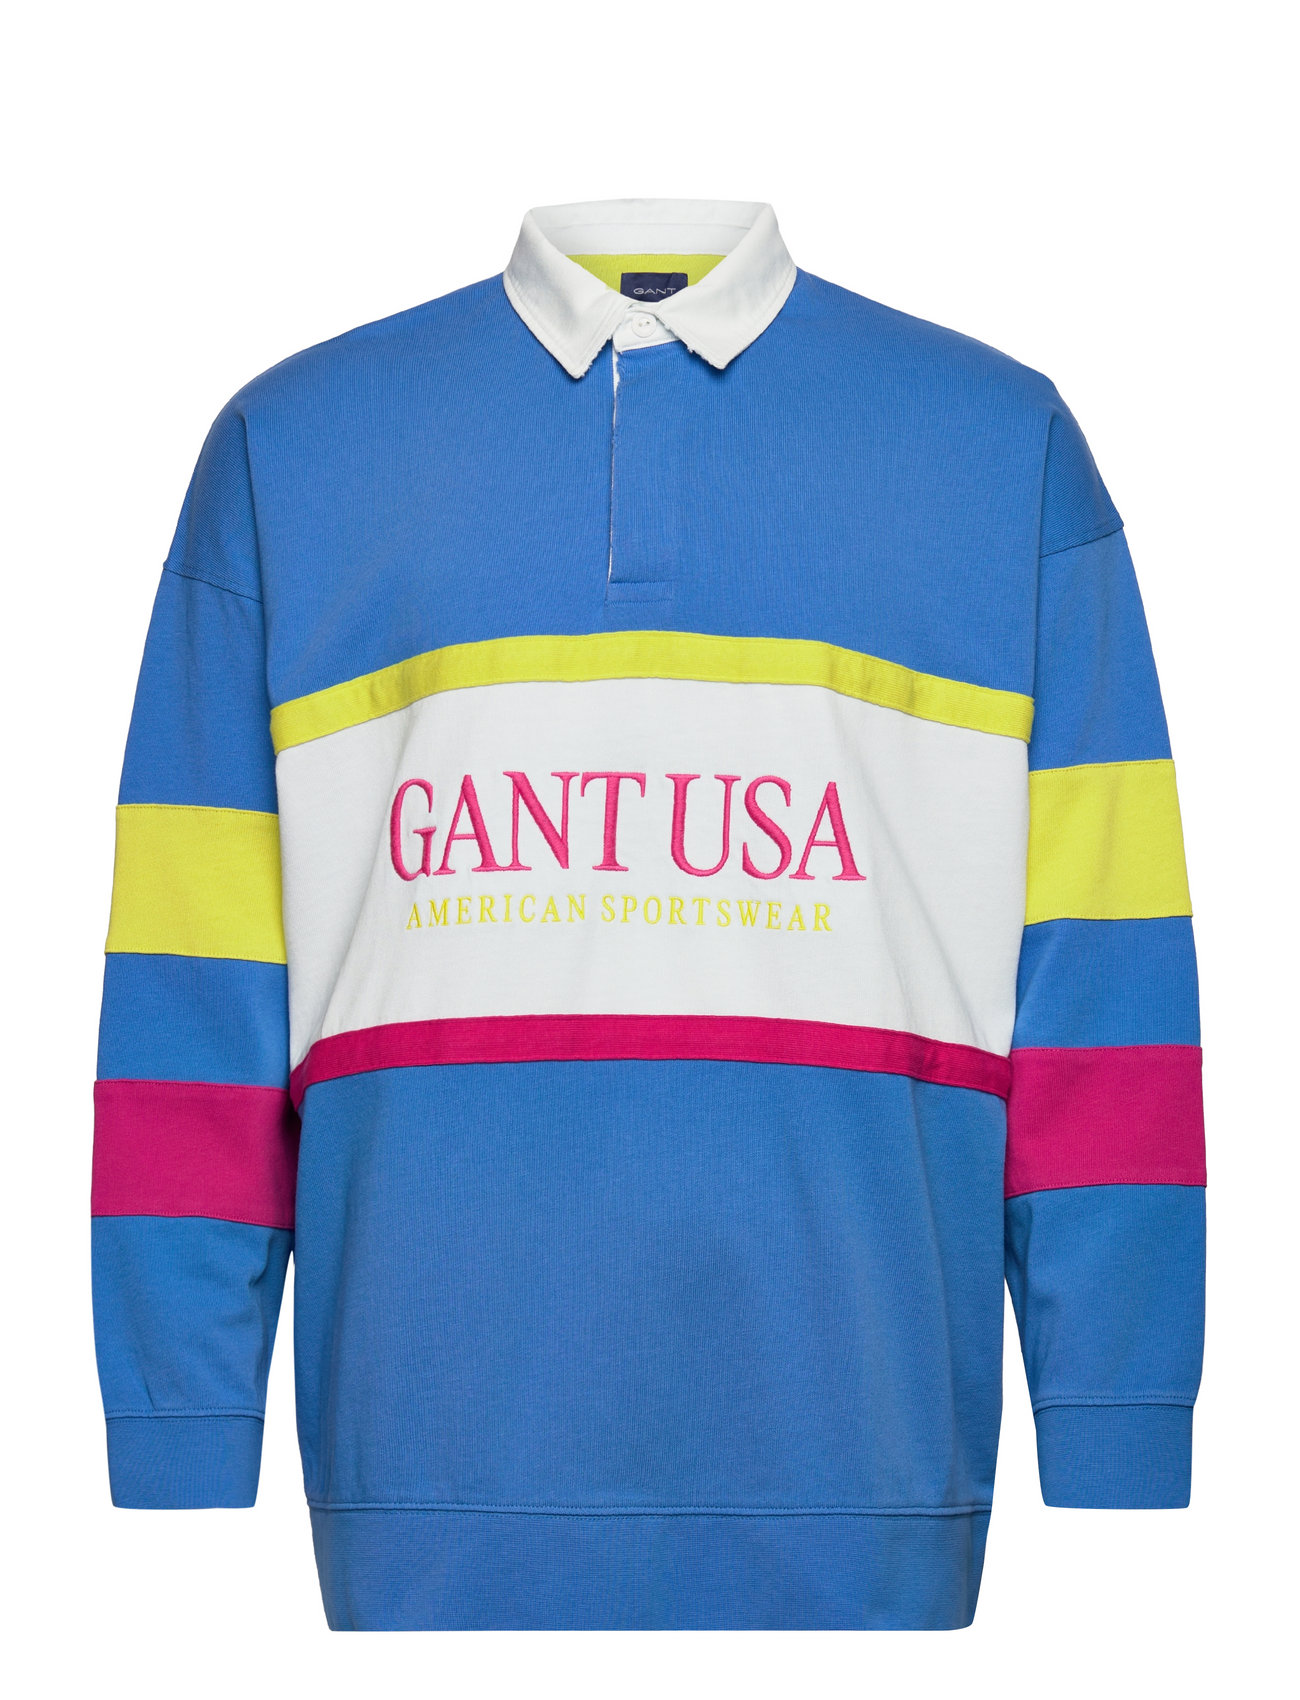 Gant Usa Archive Rugger Tops Polos Long-sleeved Blue GANT